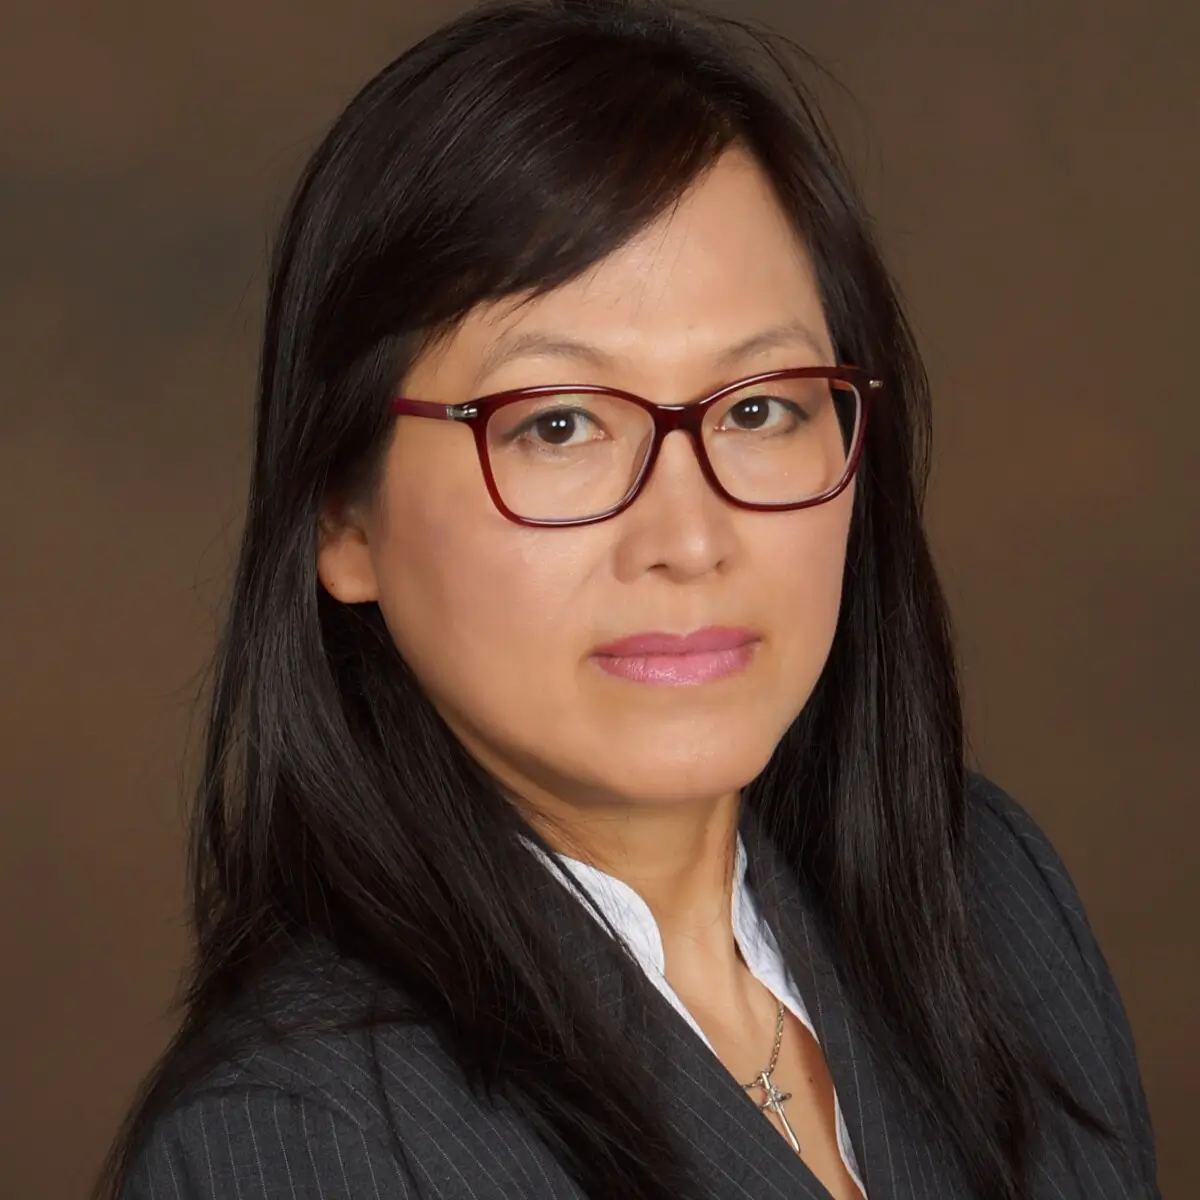 Dr. Mimi Hoang of Elite Dental